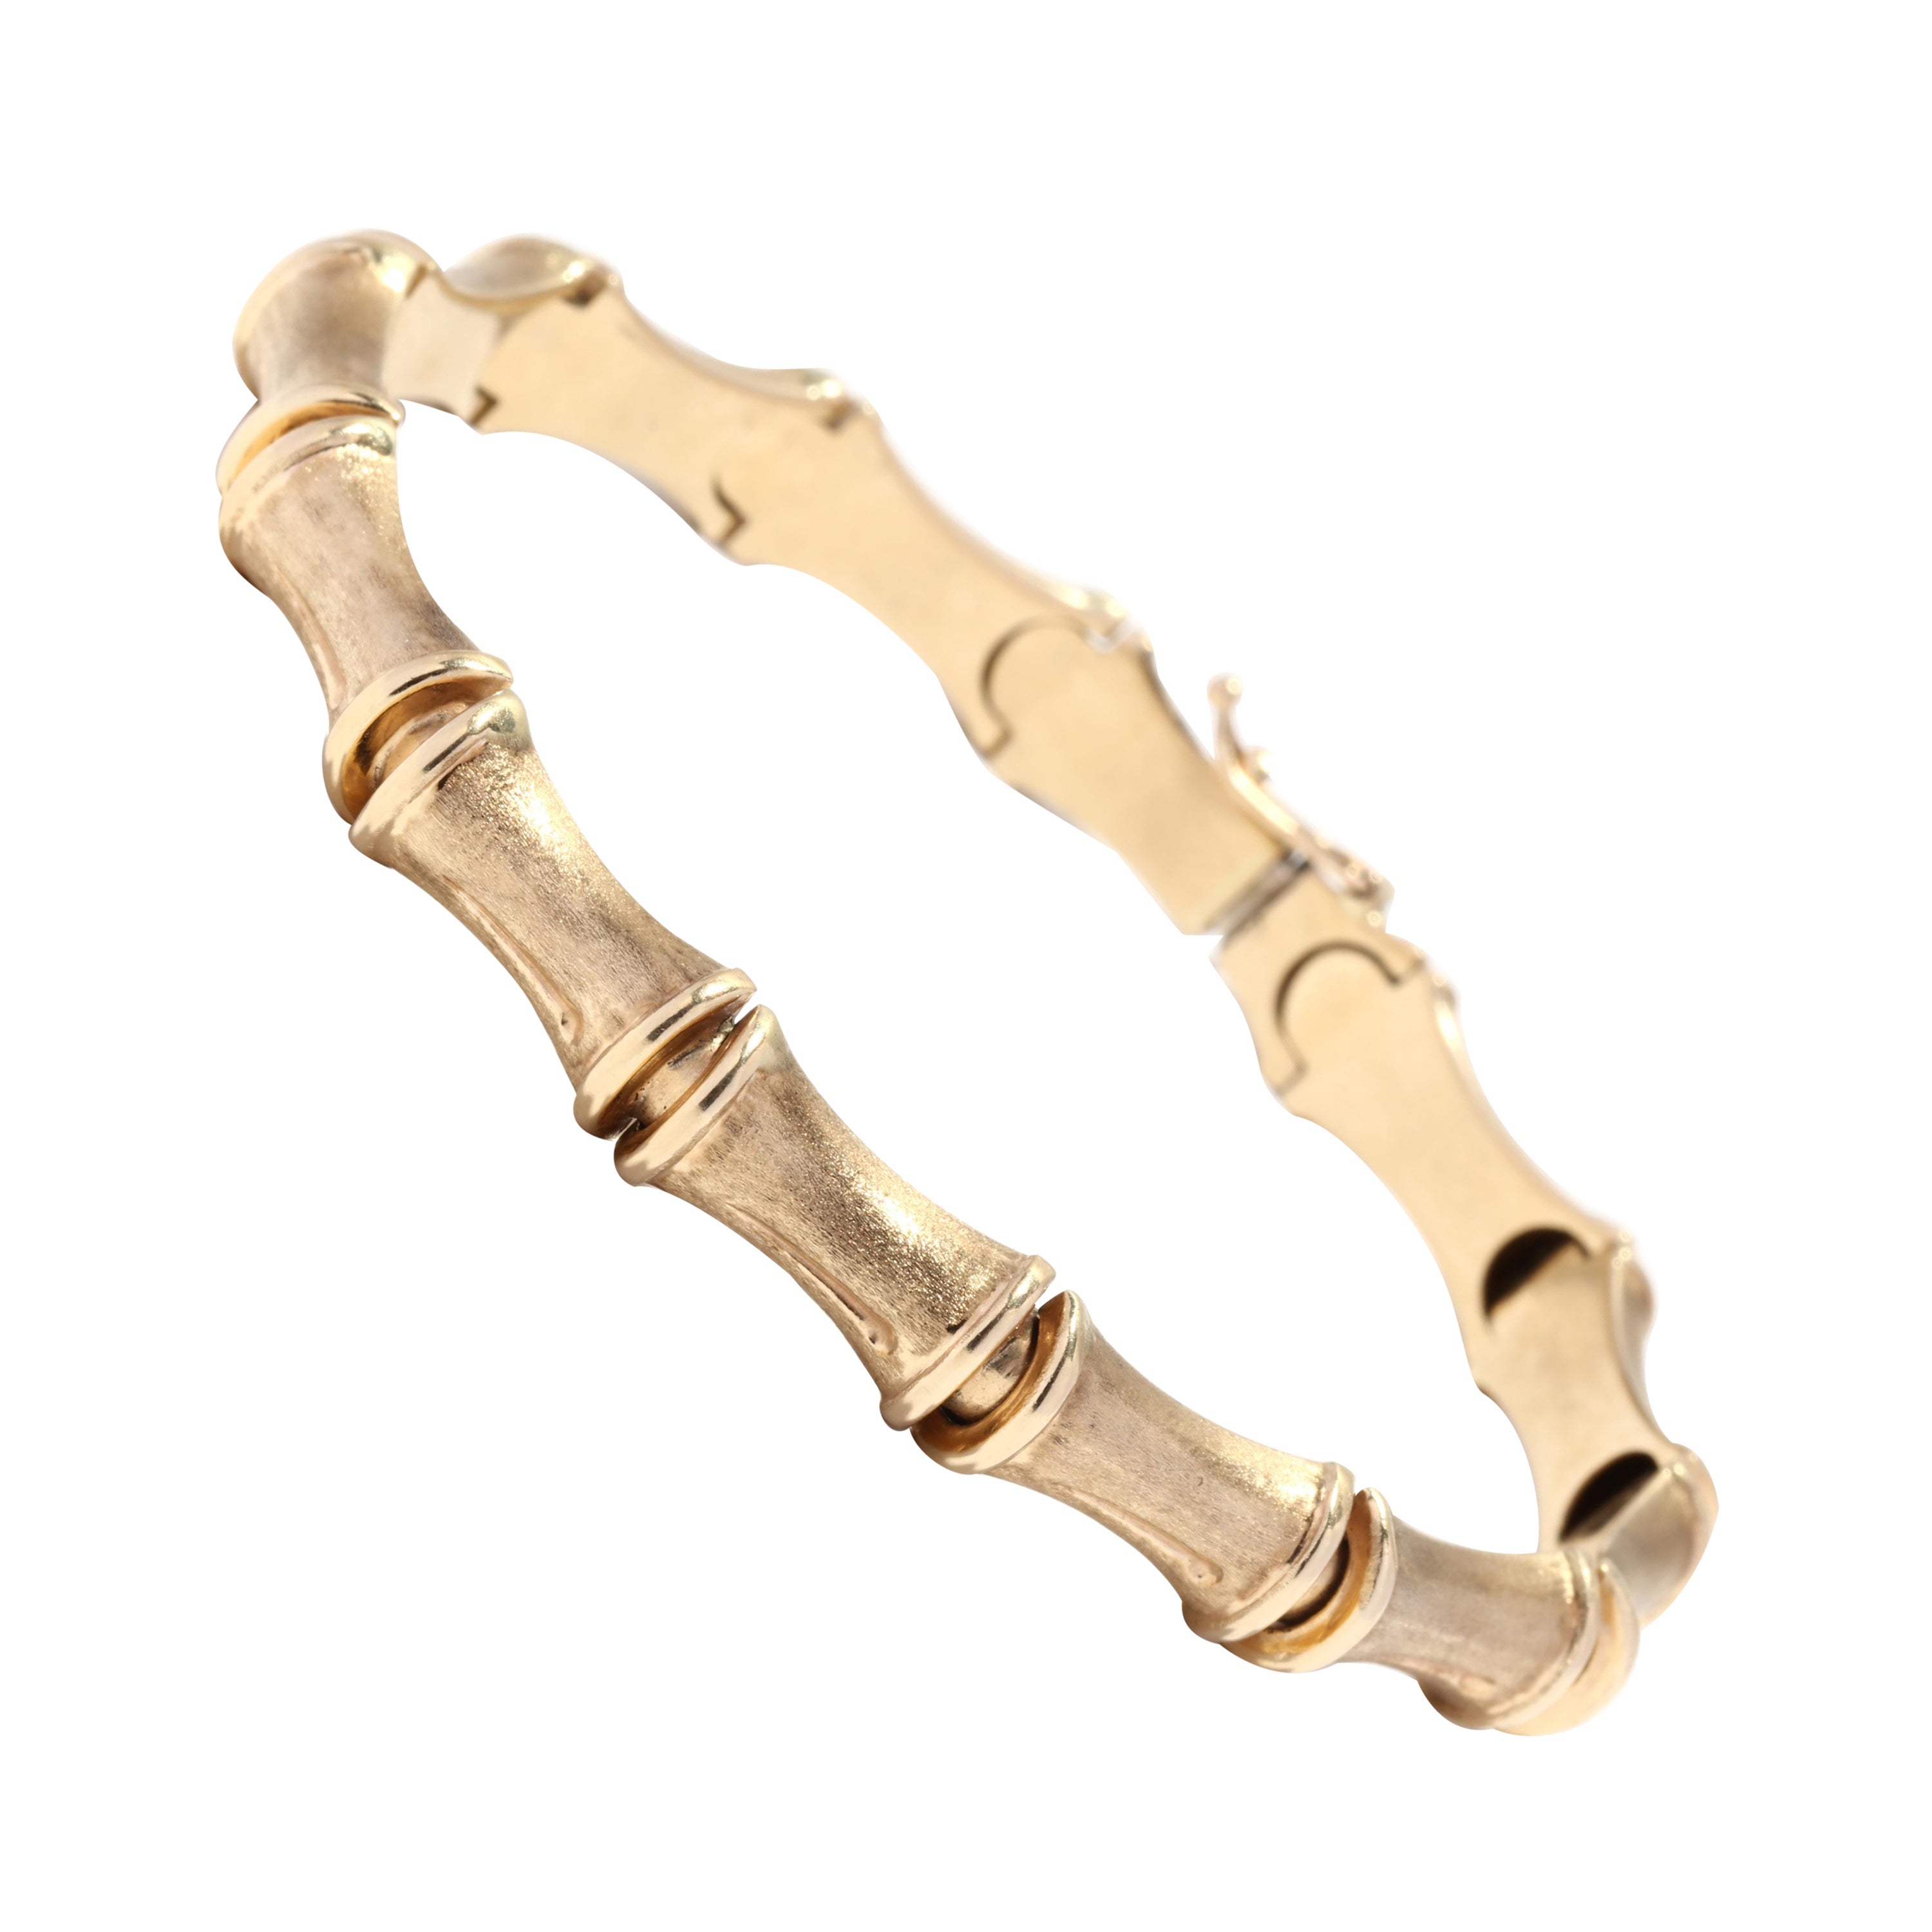 Italian Bamboo Link Bracelet, 14K Gold, Box Clasp, Matte Textured Gold Bamboo